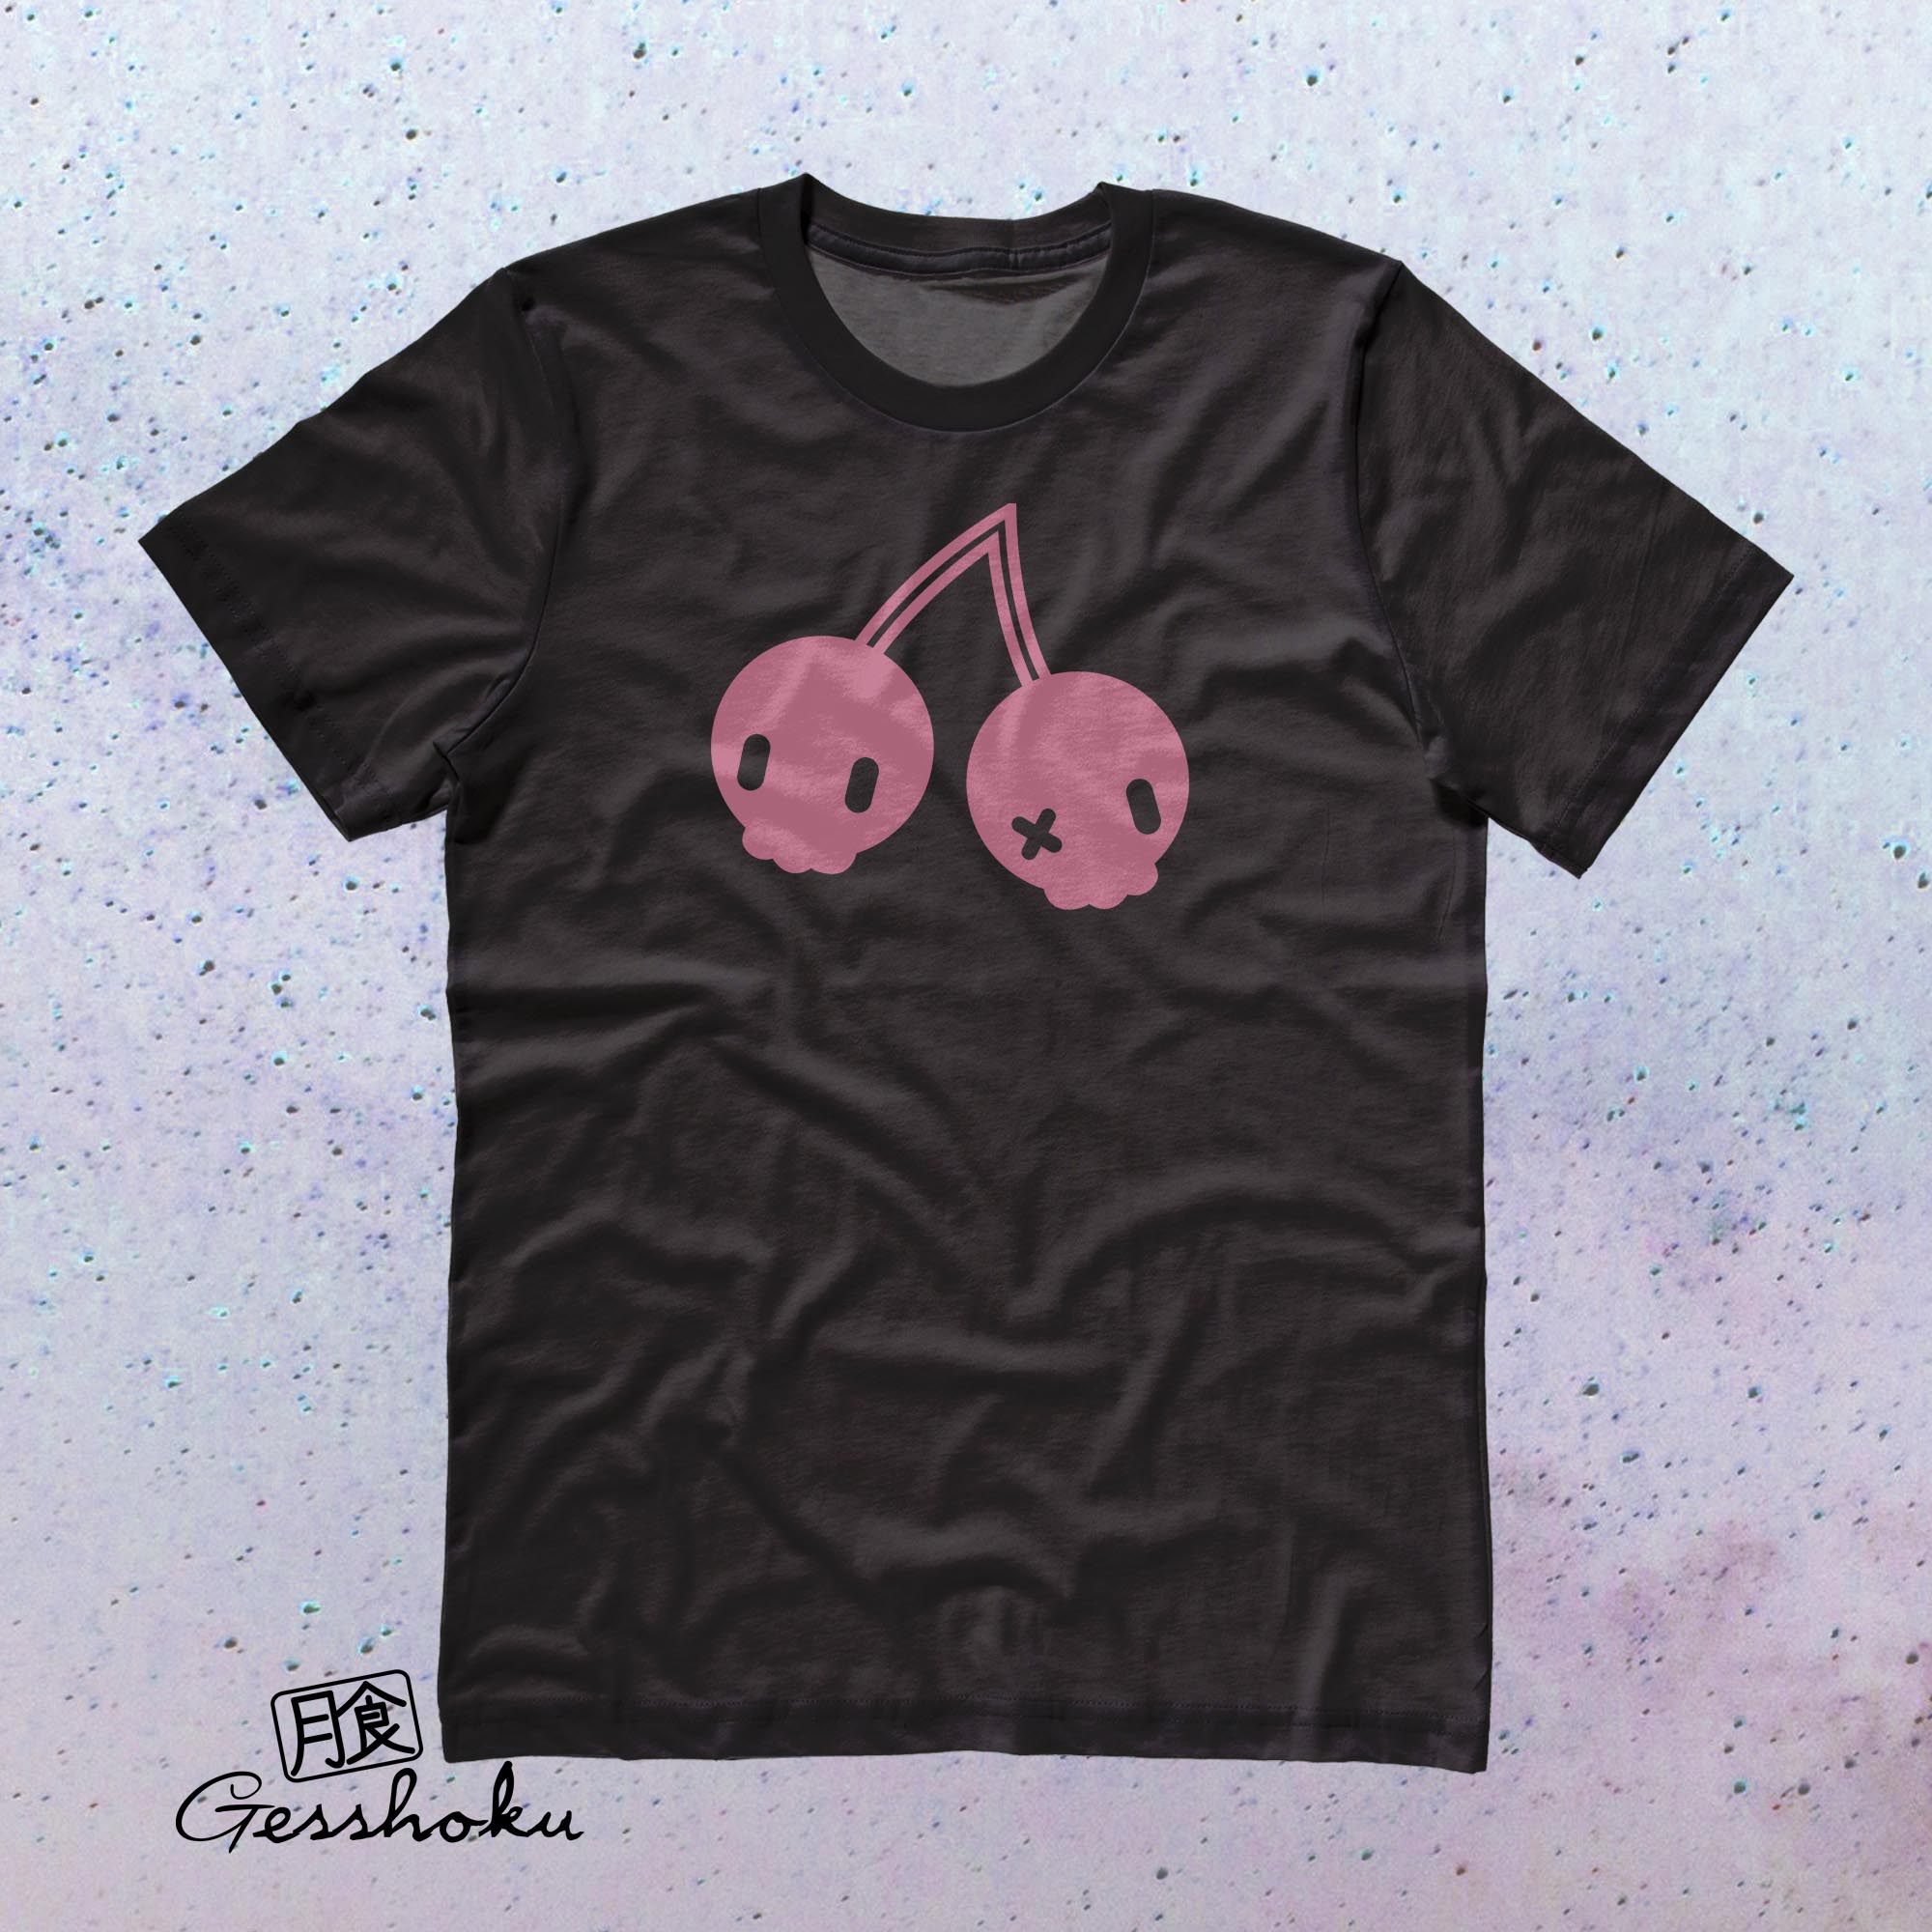 Cherry Skulls T-shirt by Dokkirii - Pink/Black